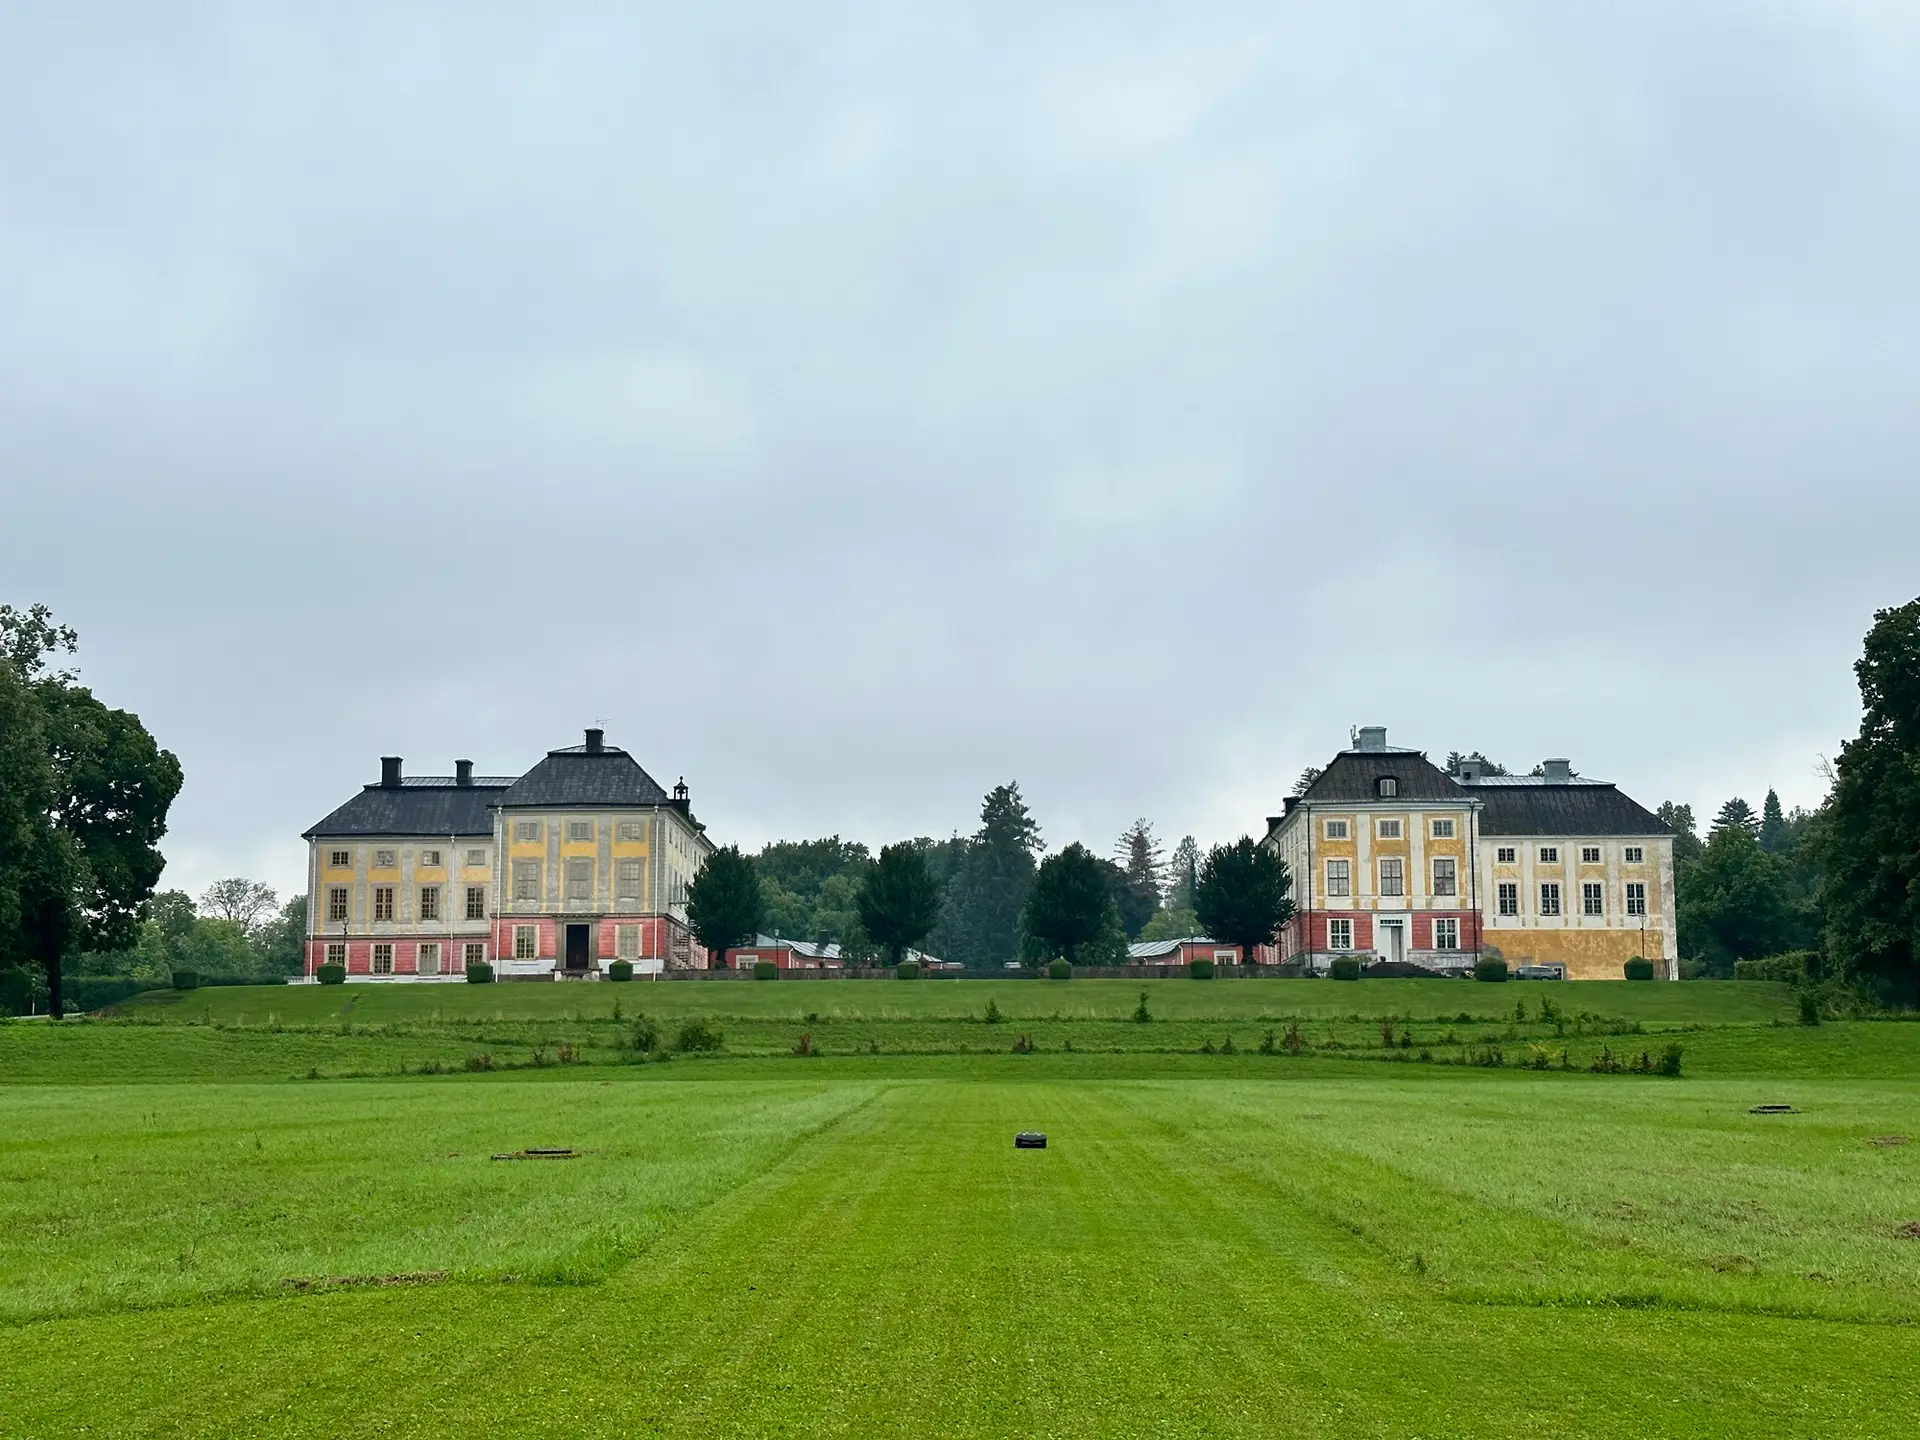 Ekolsunds slotts vy från slottsparken i öster